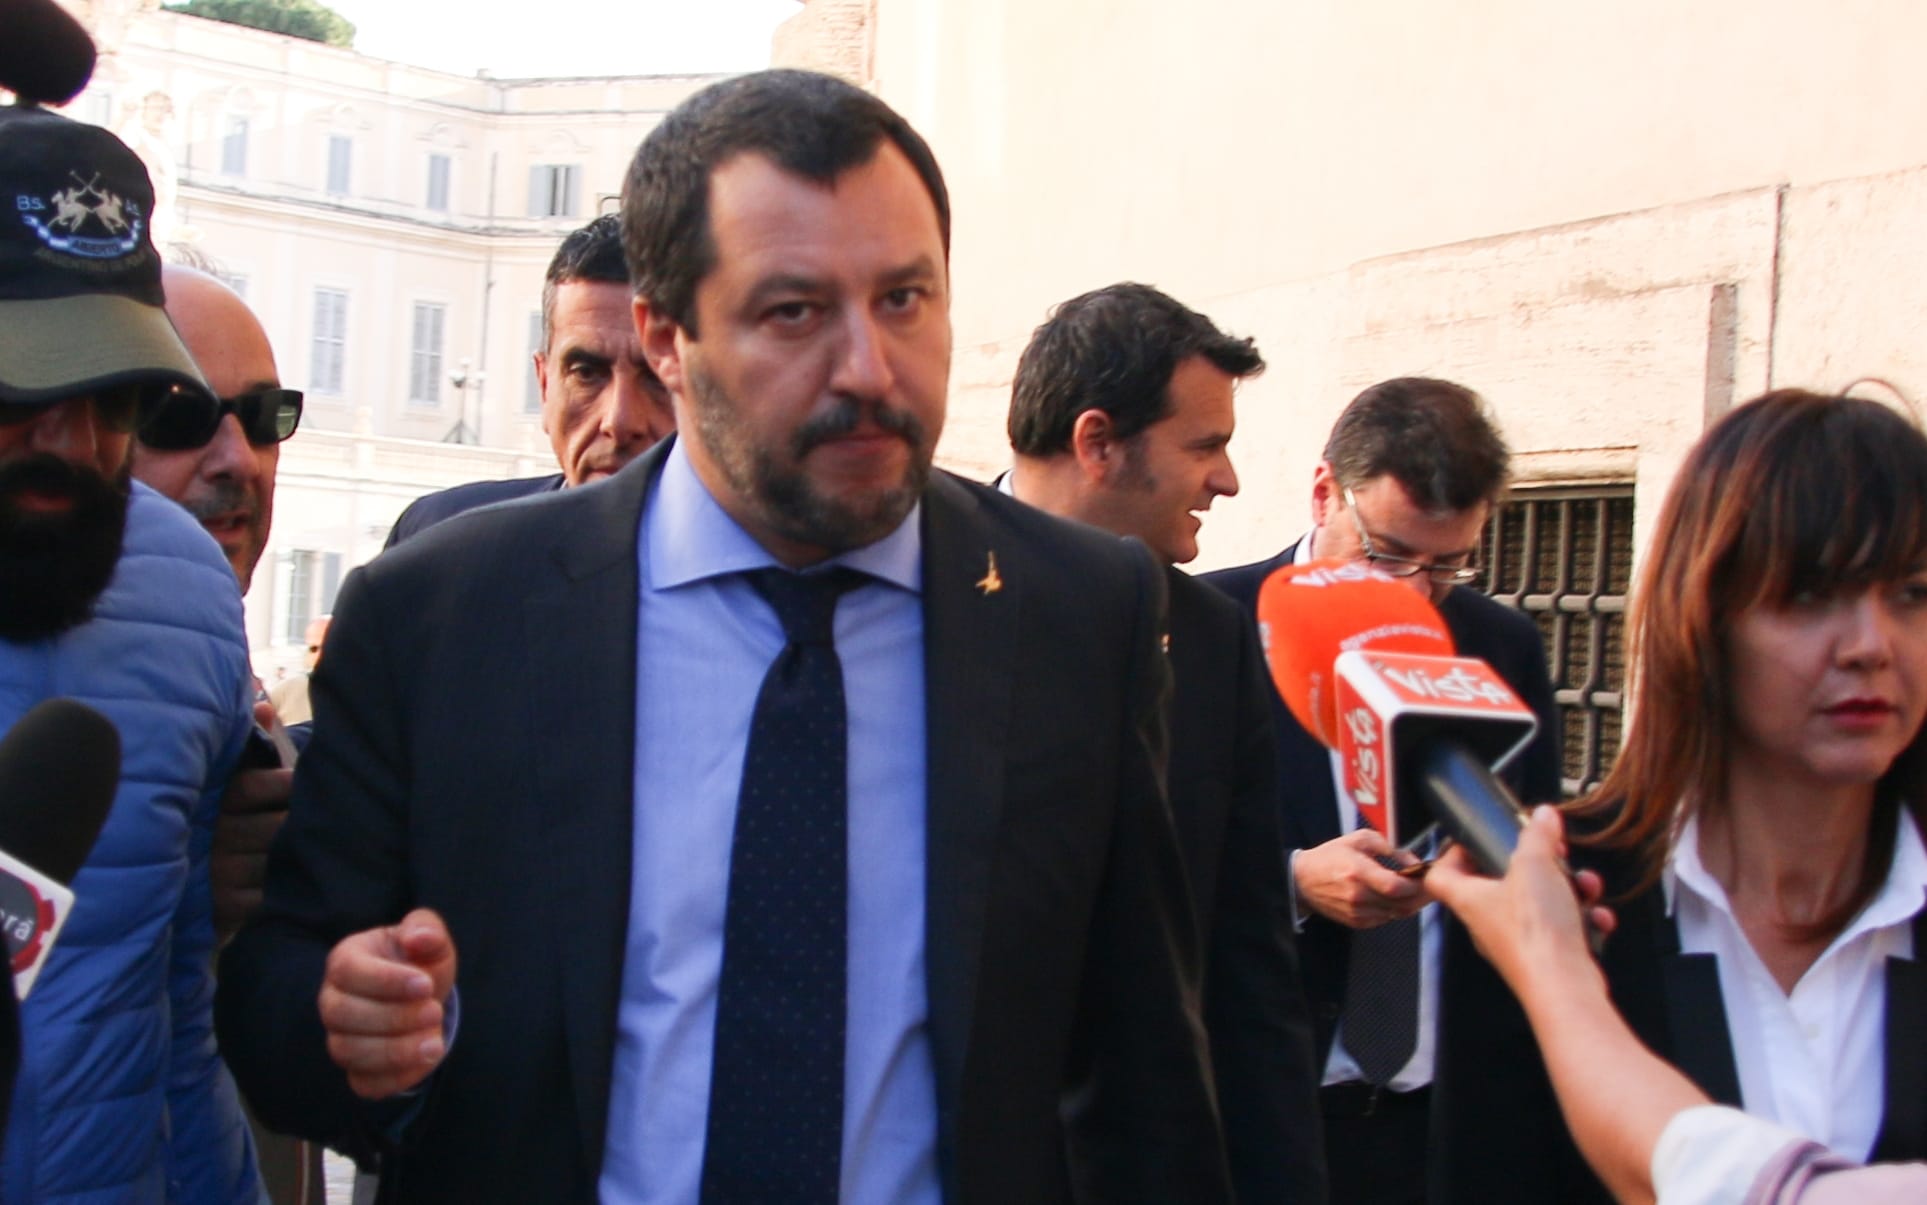 Interior Minister, Matteo Salvini, leader of the far-right party Lega.